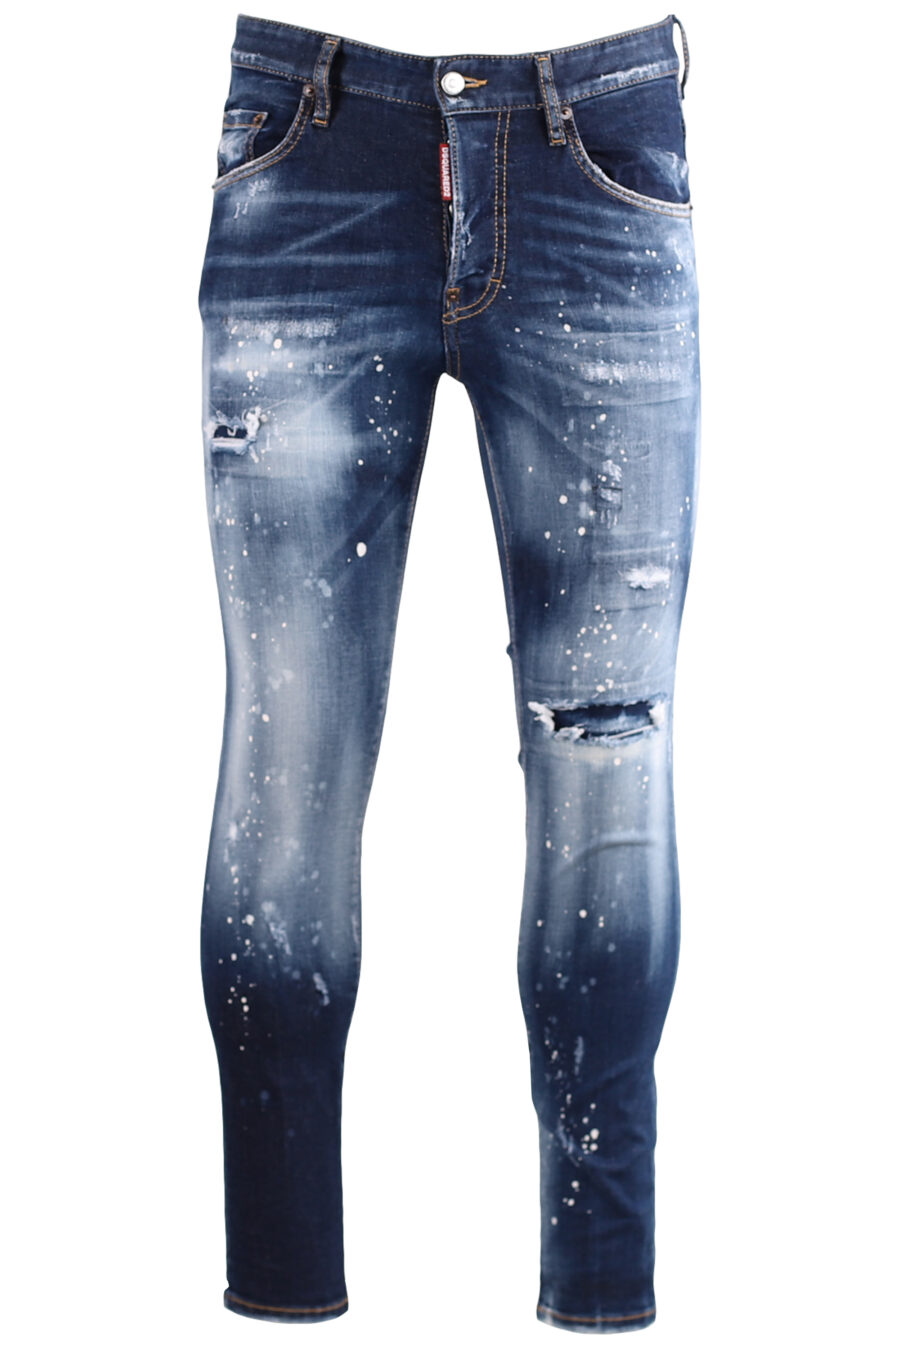 Pantalón vaquero "Skater" azul semidesgastado con splash blanco - IMG 7259